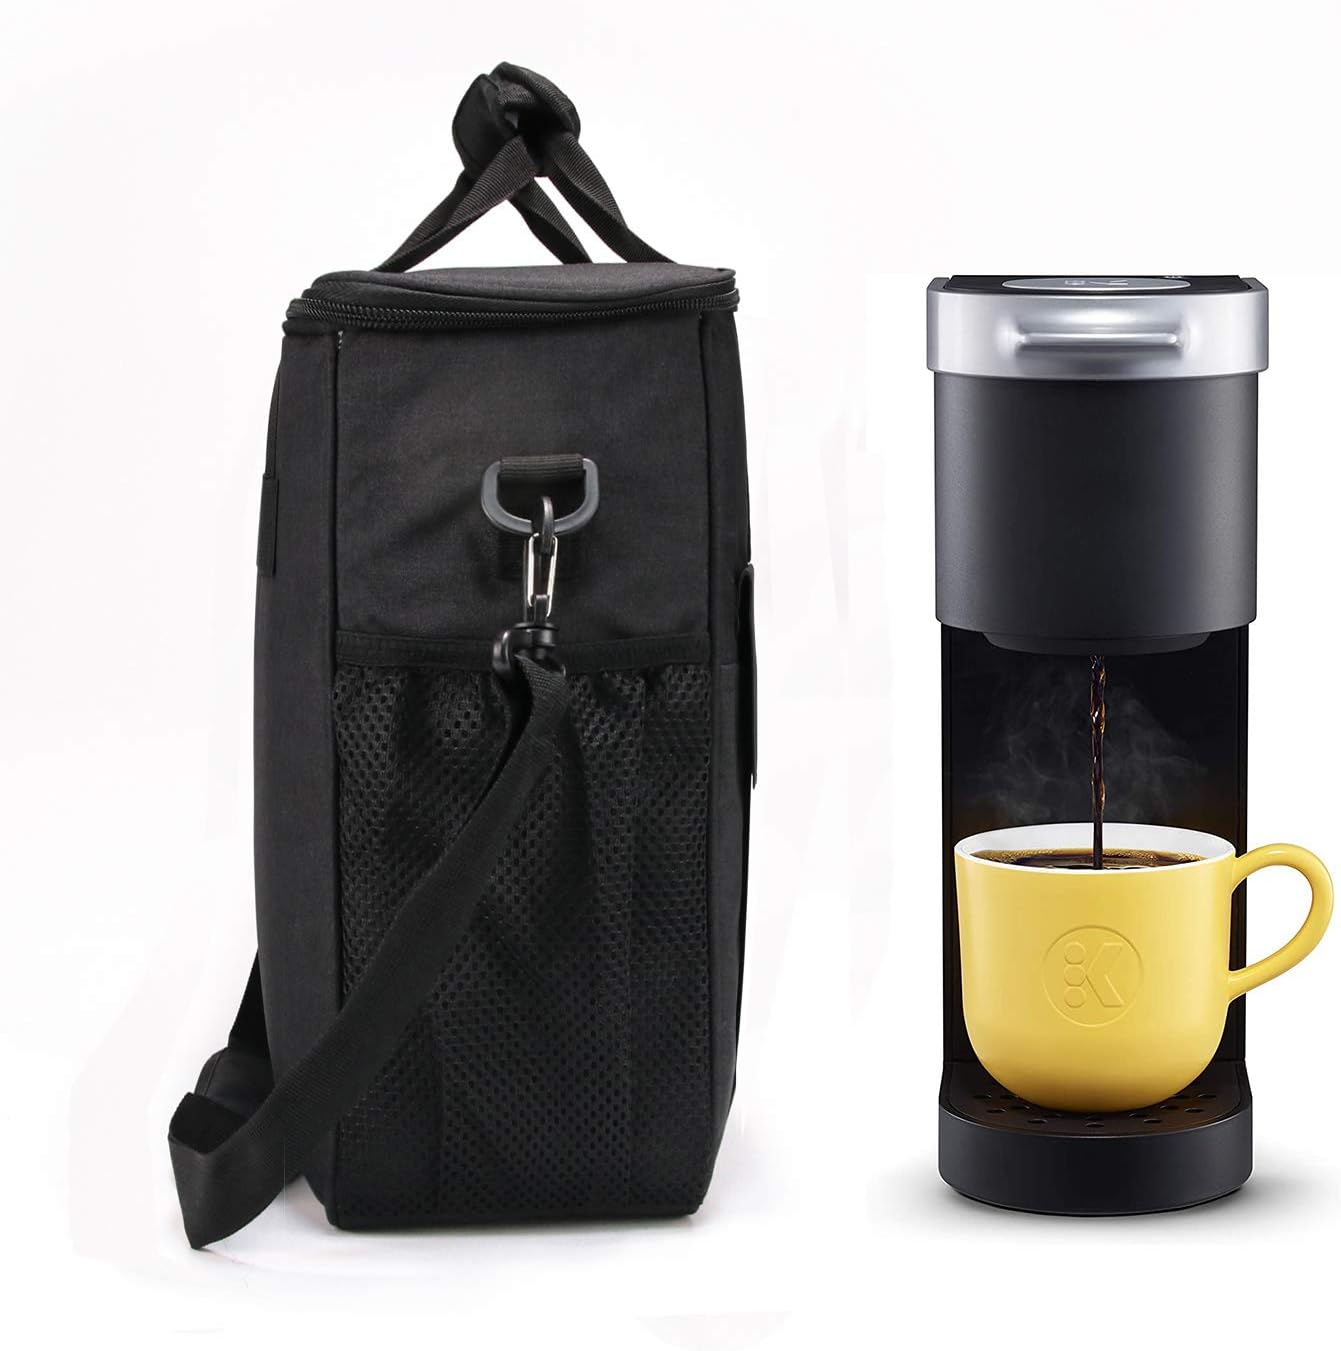 VOSDANS Travel Coffee Maker Carry Bag: The Perfect Travel Companion for Keurig K-Mini or K-Mini Plus Coffee Maker